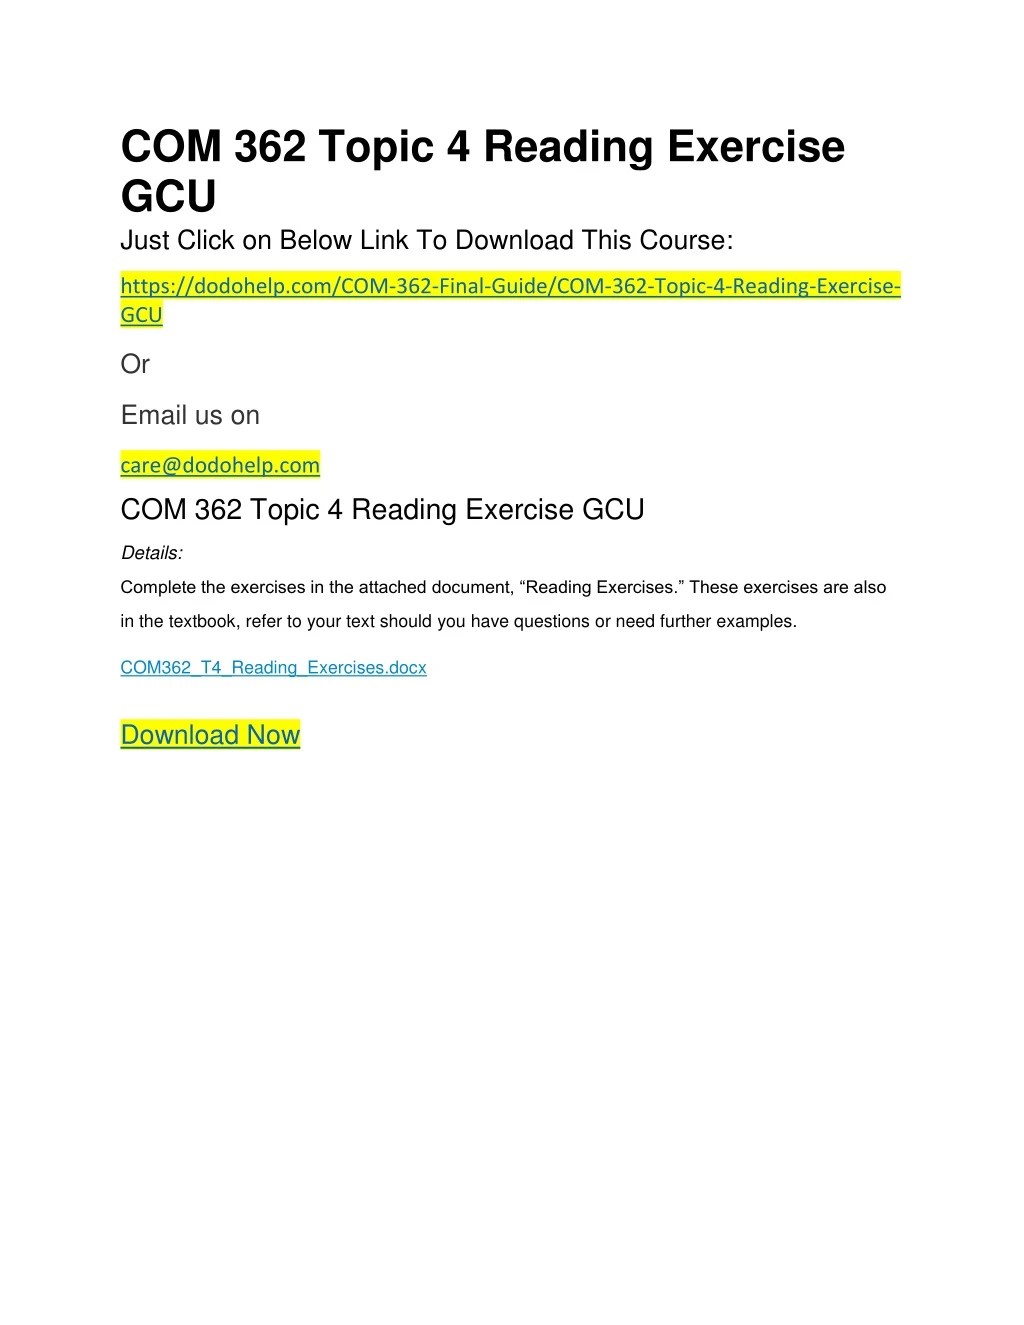 com 362 topic 4 reading exercise gcu just click